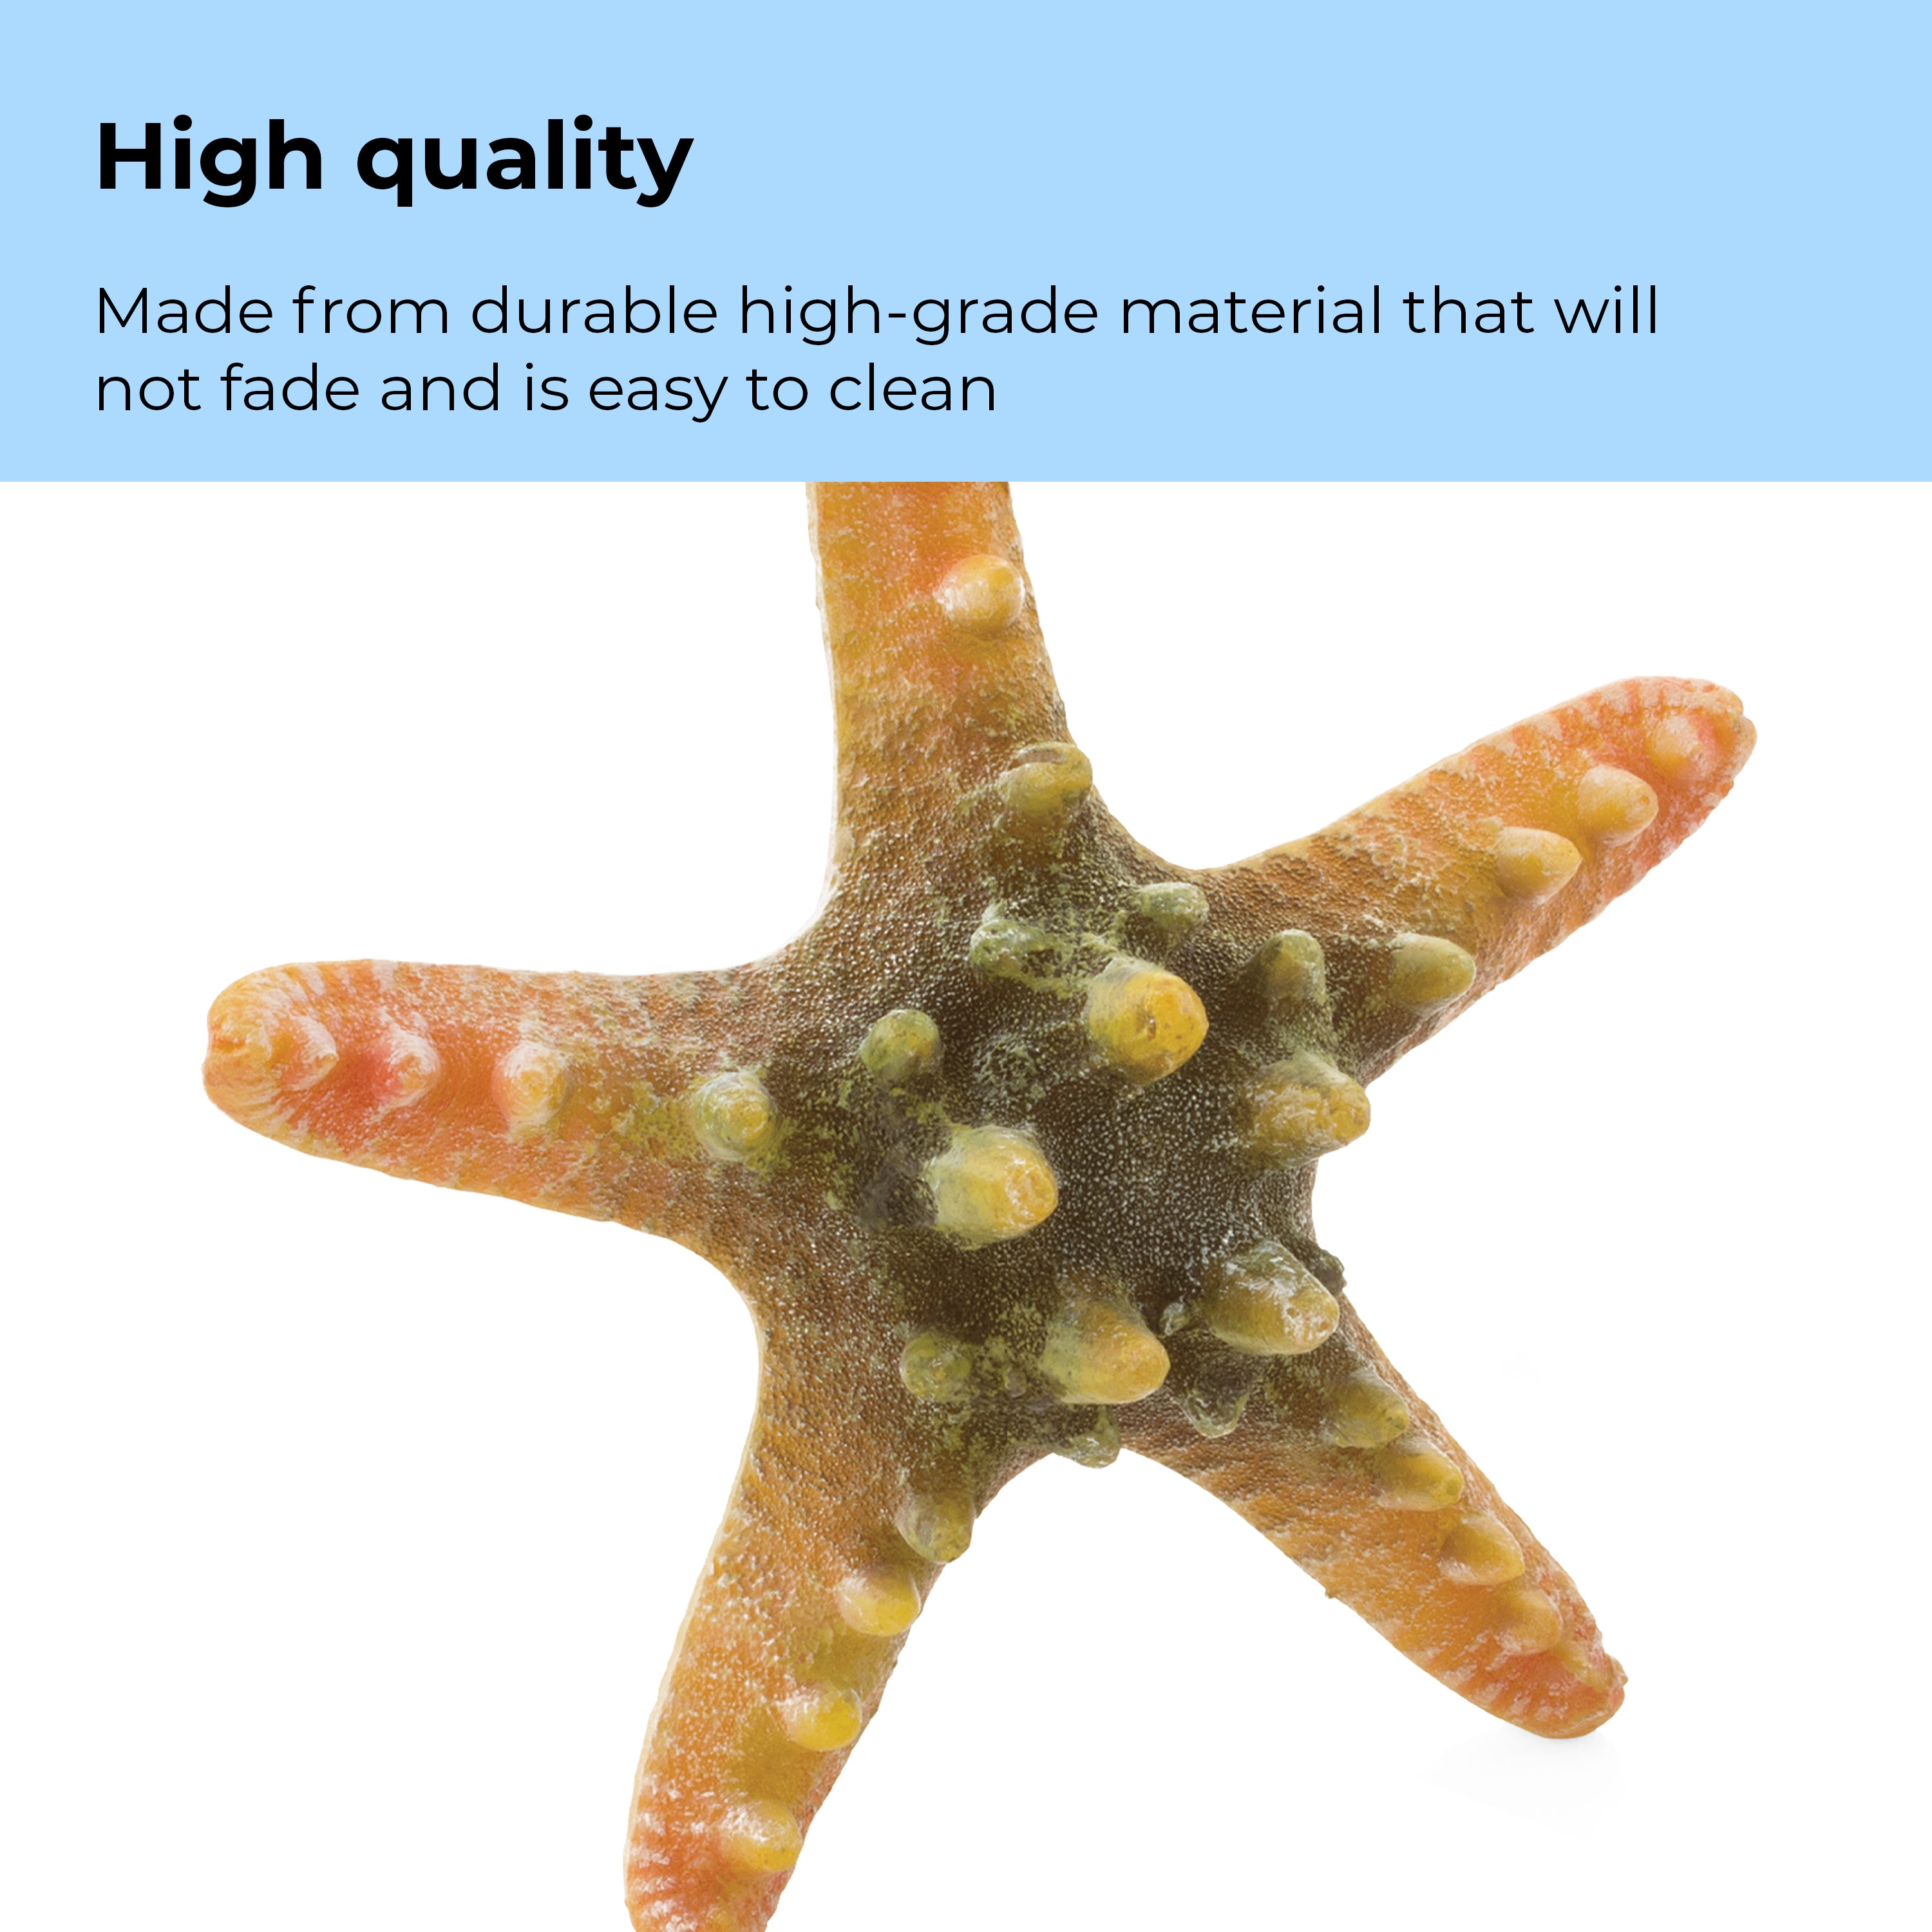 Starfish Set - High quality